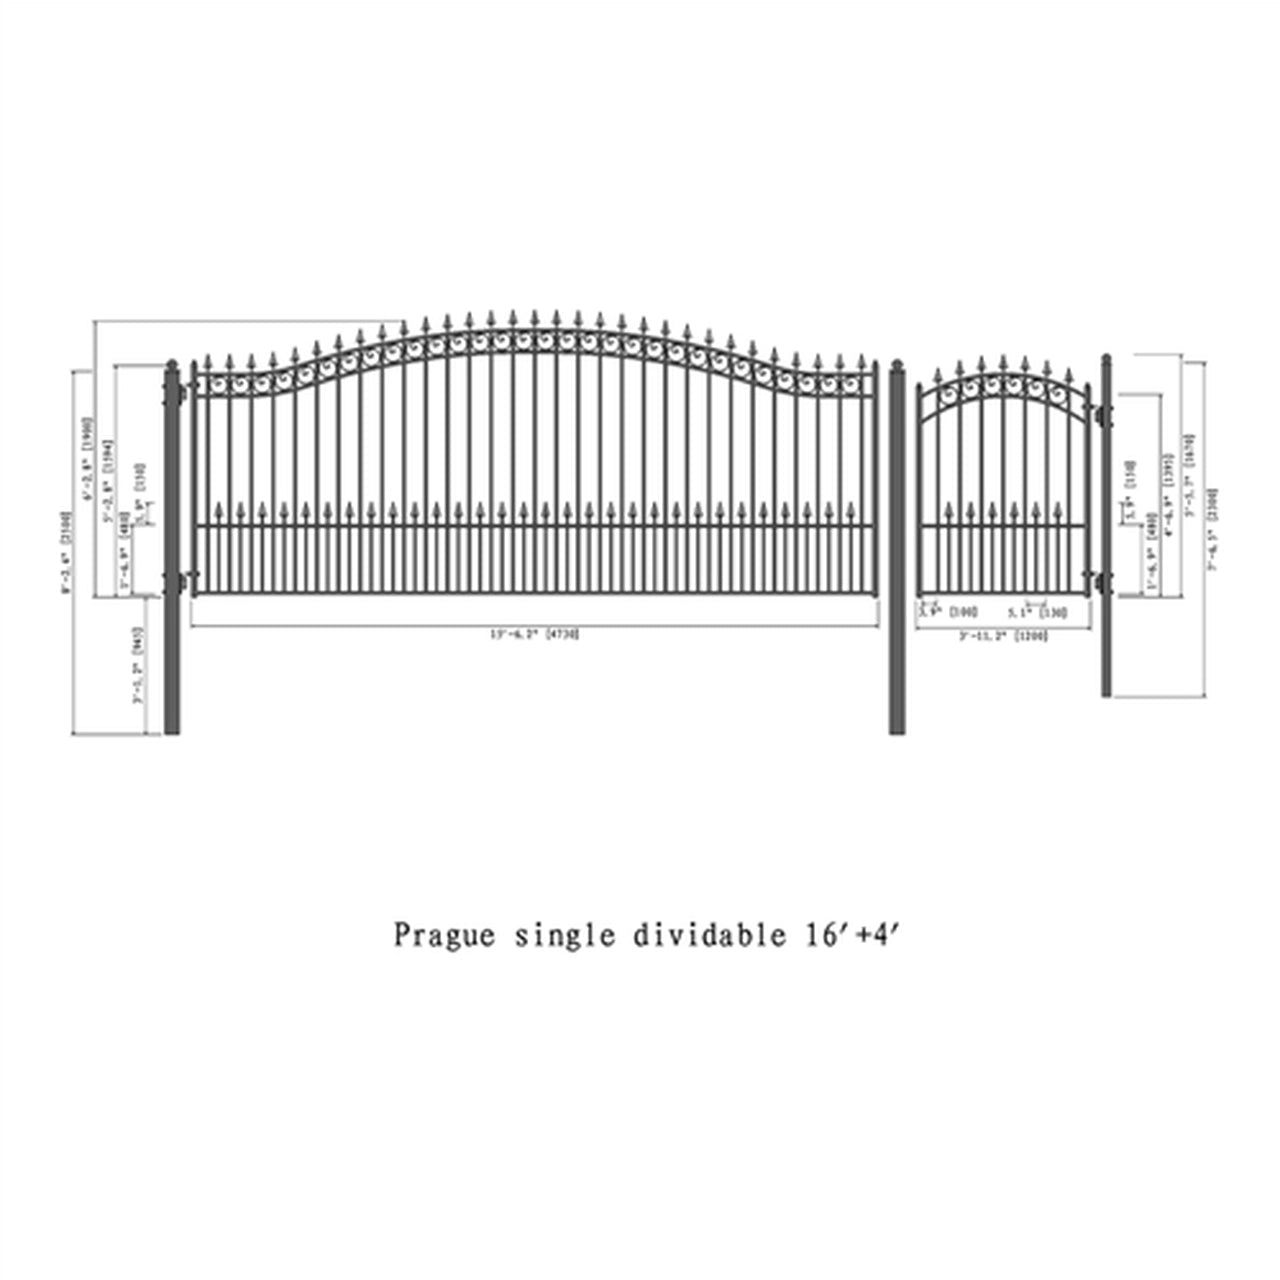 Aleko Steel Single Swing Driveway Gate - PRAGUE Style - 16 ft with Pedestrian Gate - 5 ft